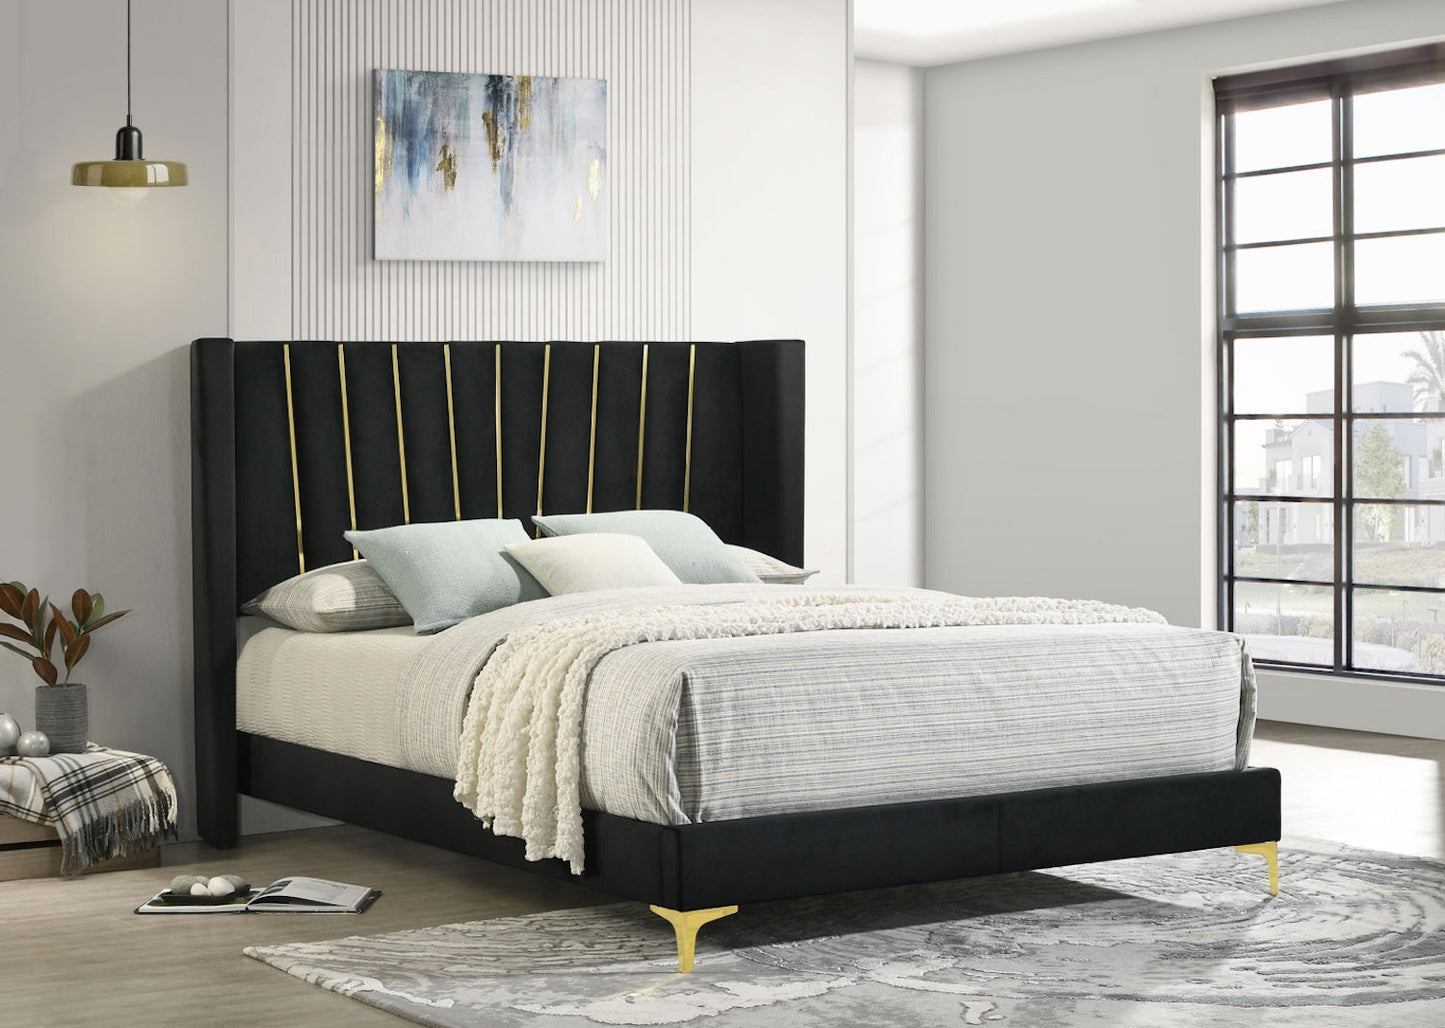 Kendall Upholstered Tufted Queen Bedroom Set - Black